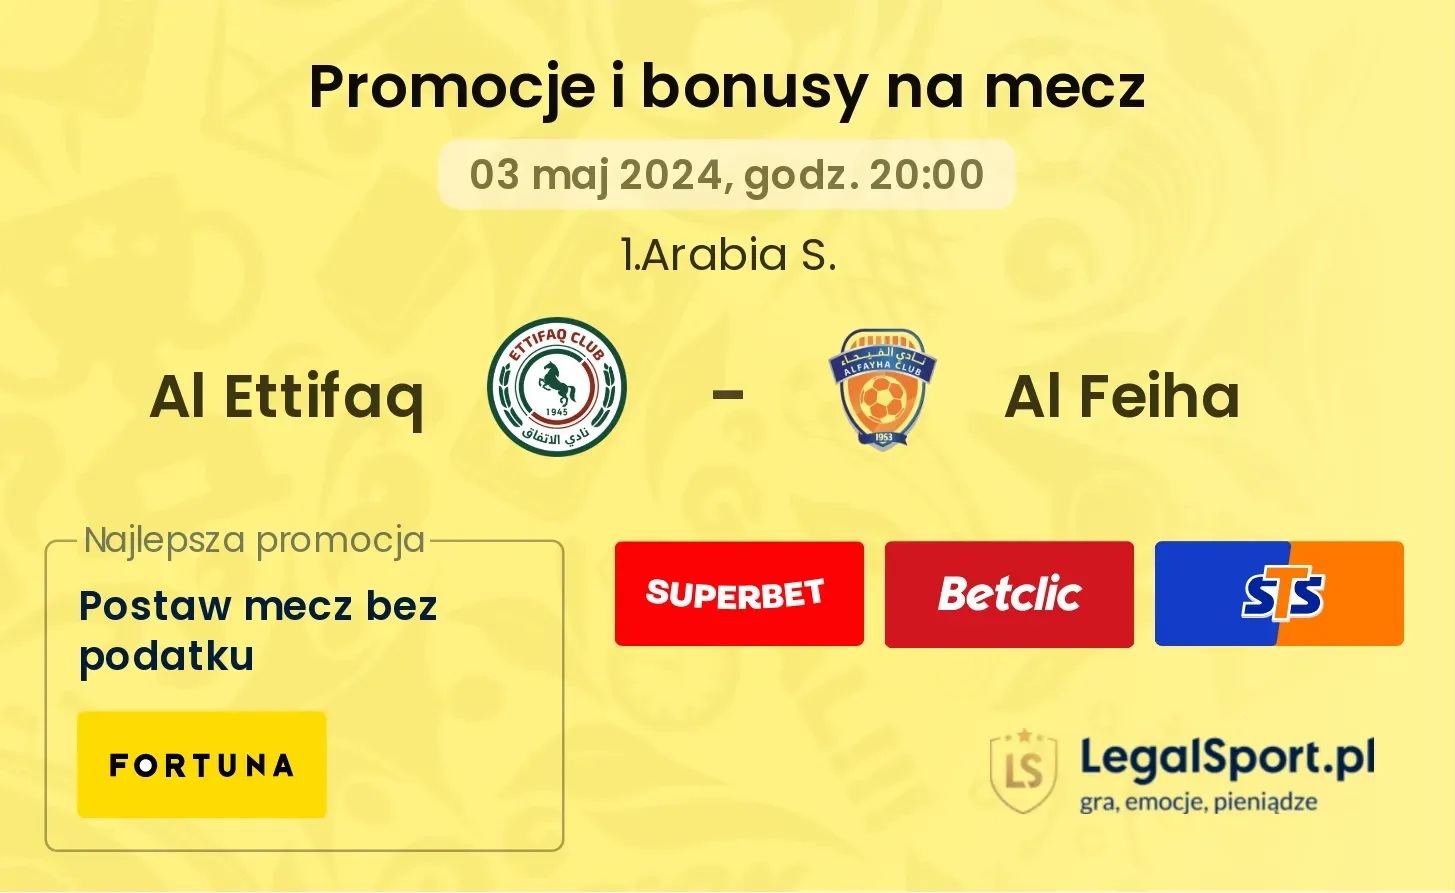 Al Ettifaq - Al Feiha promocje bonusy na mecz